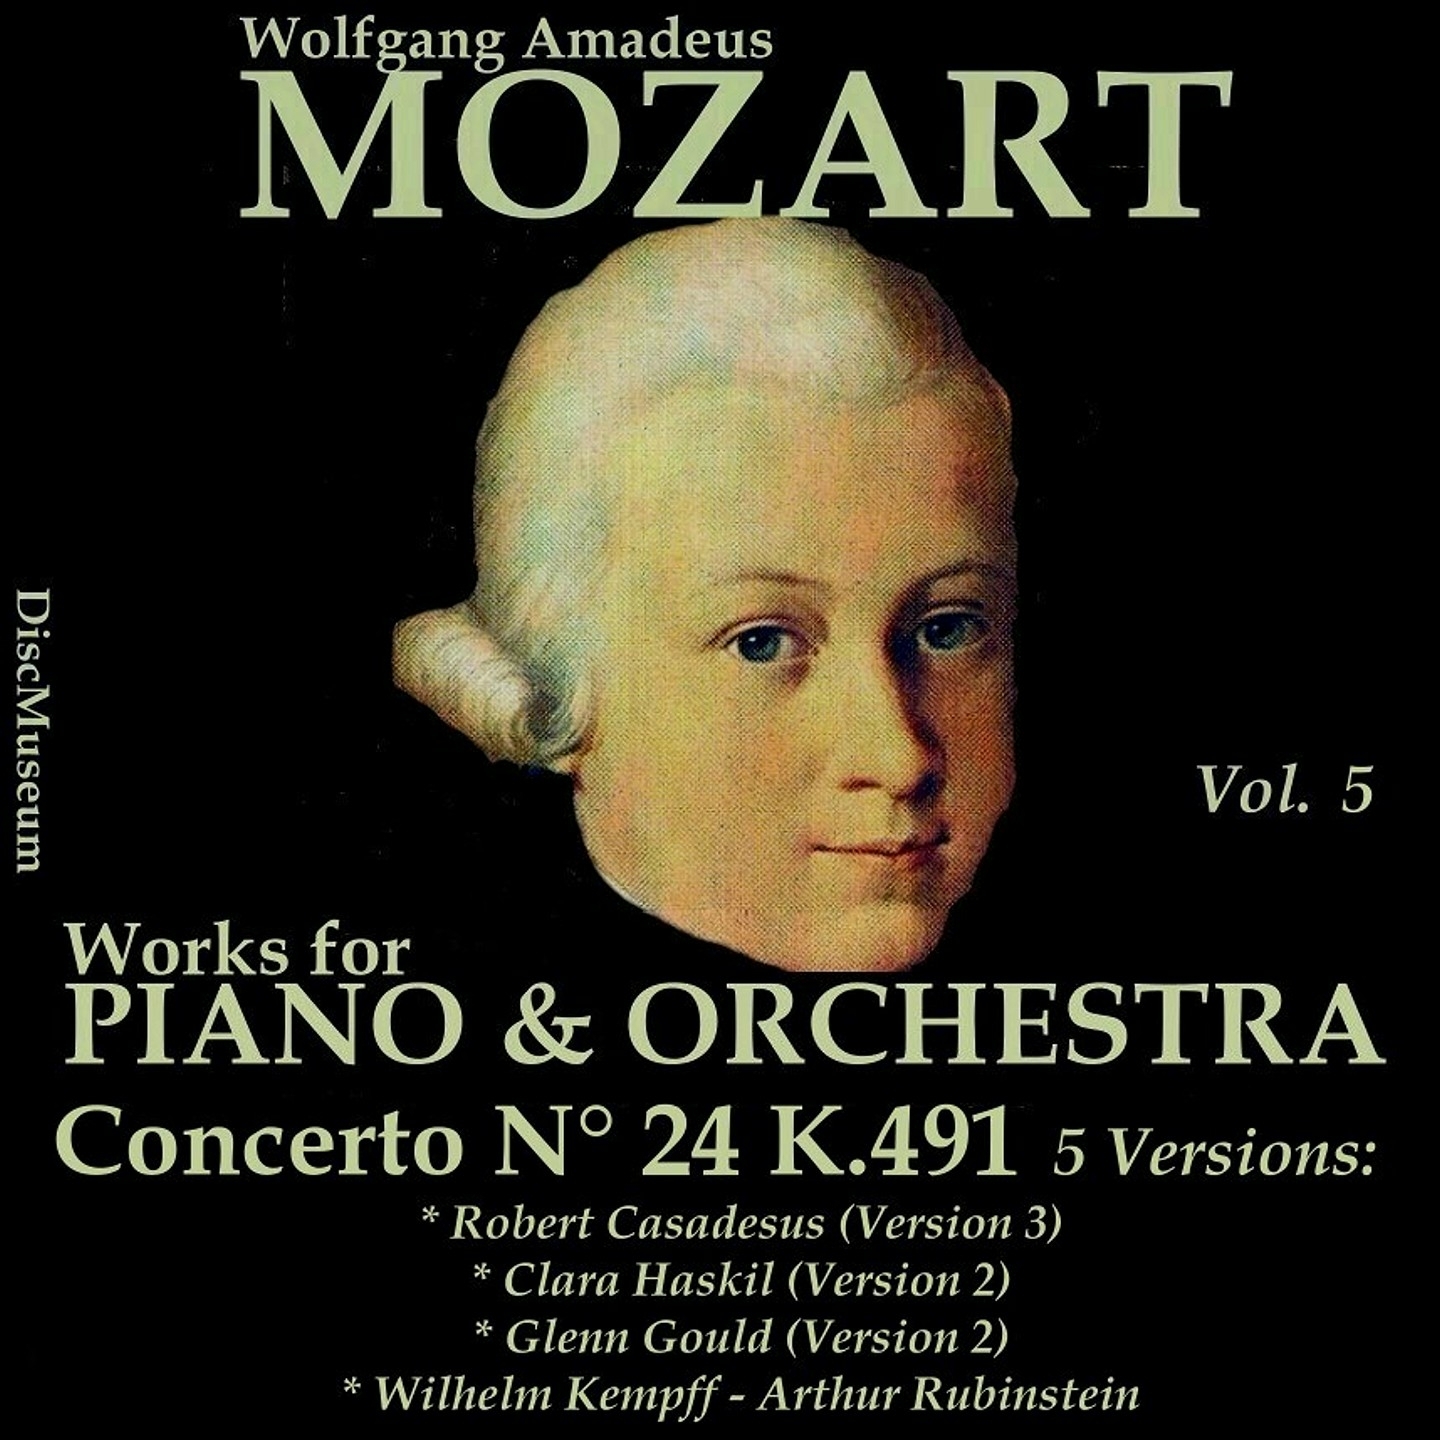 Concerto No. 24 for Piano and Orchestra in C Minor, K491: II. Larghetto